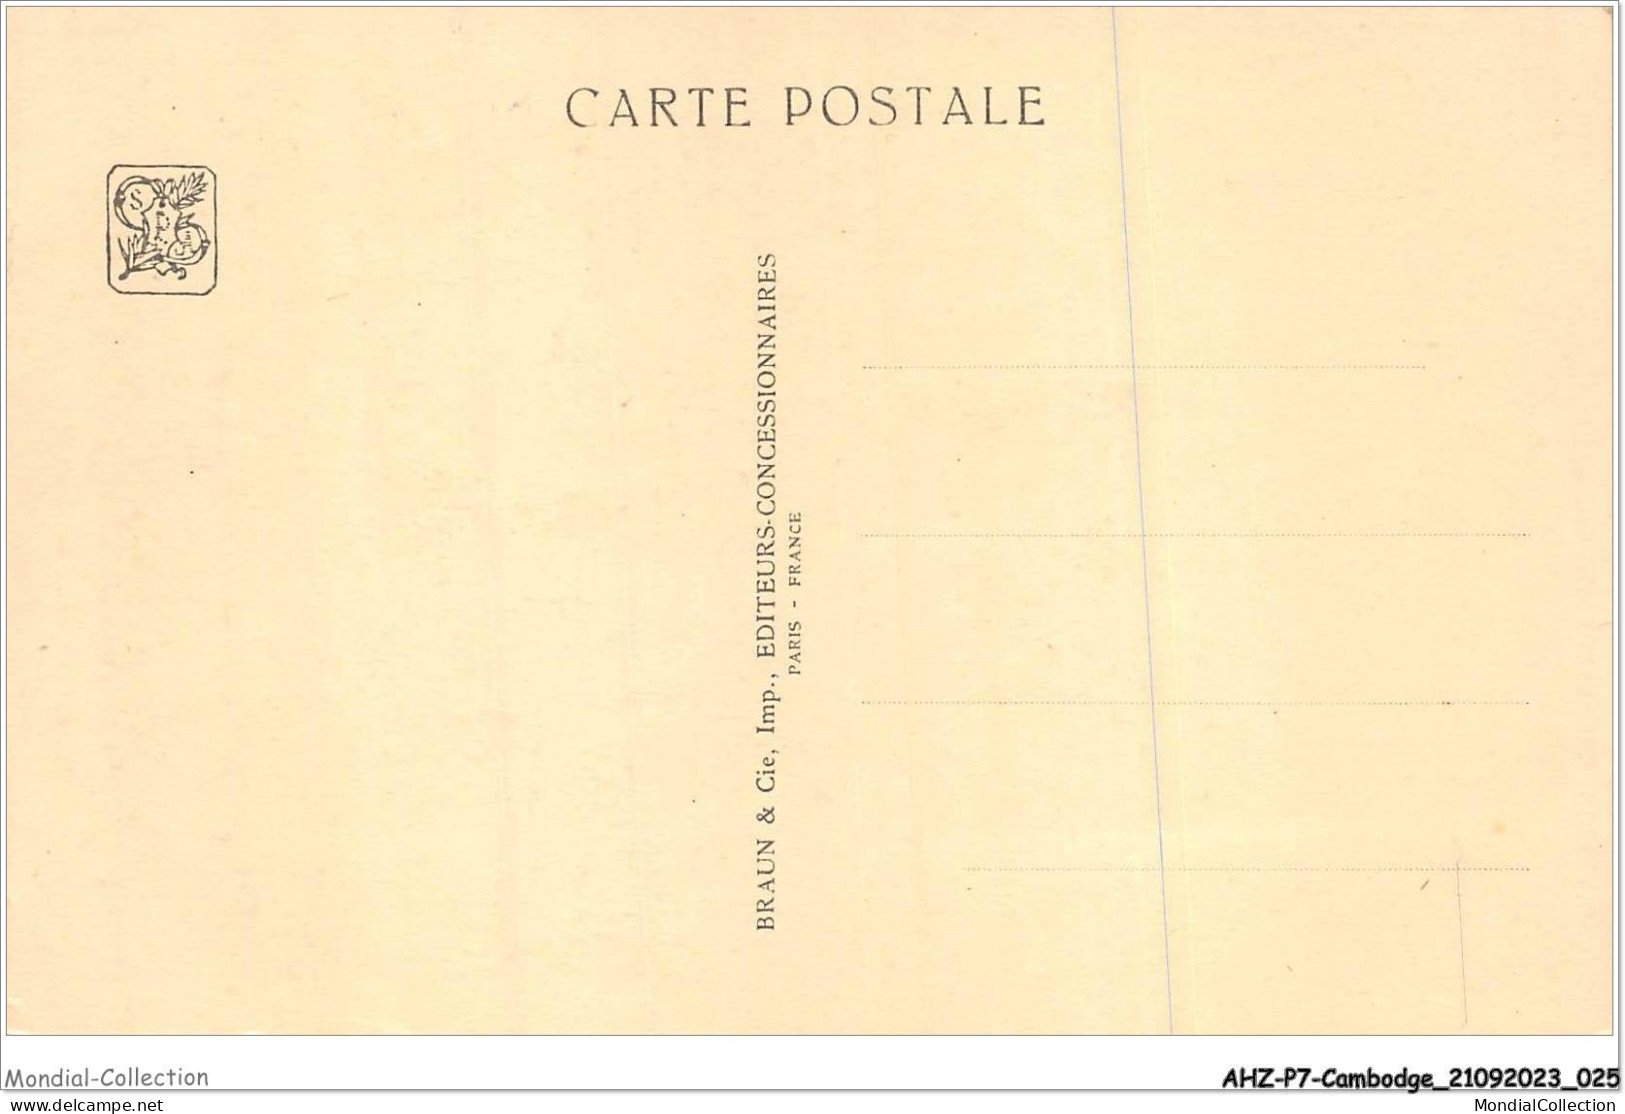 AHZP7-CAMBODGE-0608 - EXPOSITION COLONIALE INTERNATIONALE - PARIS 1931 - ANGKOR-VAT - GALERIE NORD-EST - Cambodia